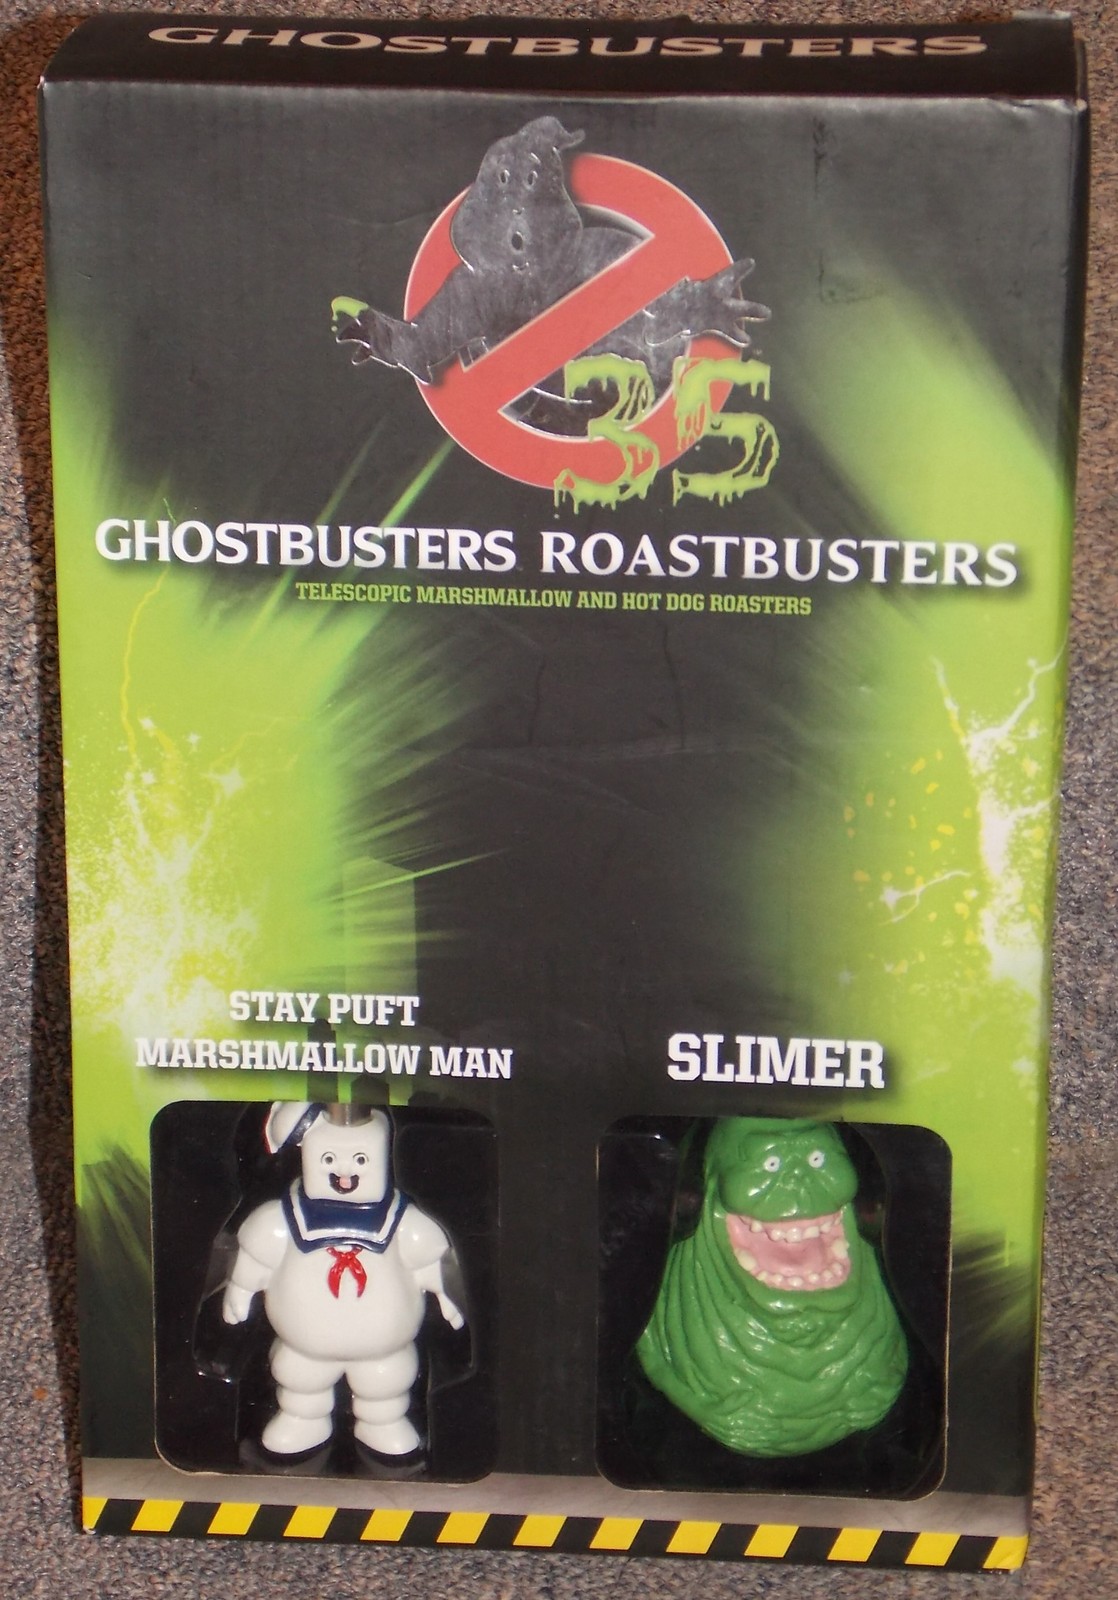 Primary image for 2019 Ghostbusters Roastbusters Telescopic Hotdog & Marshmallow Roasters NIB